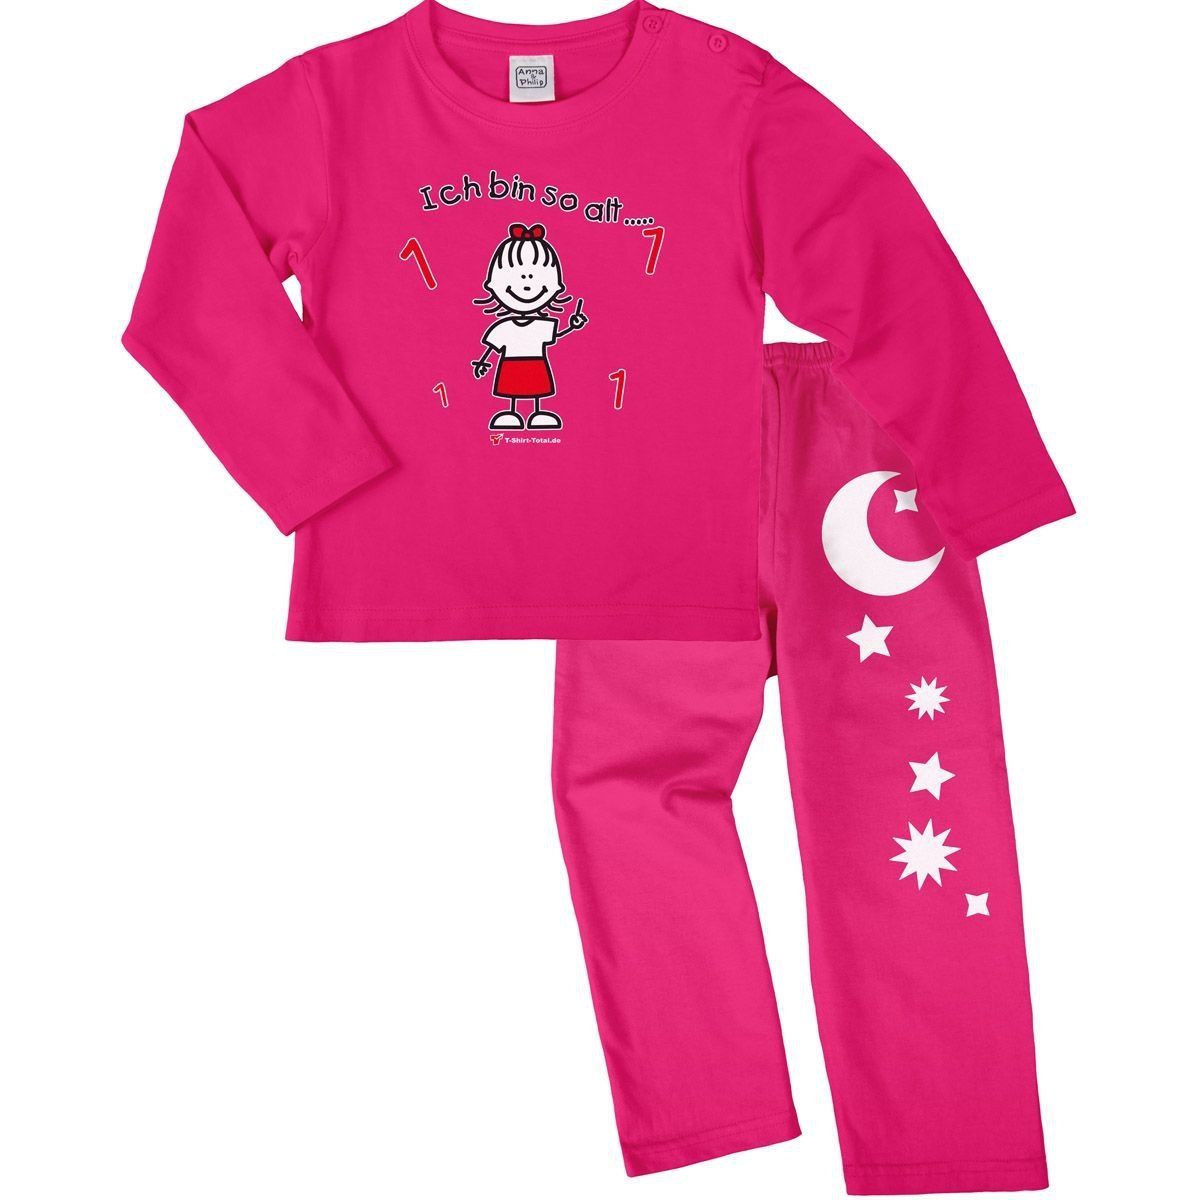 Mädchen so alt 1 Pyjama Set pink / pink 68 / 74